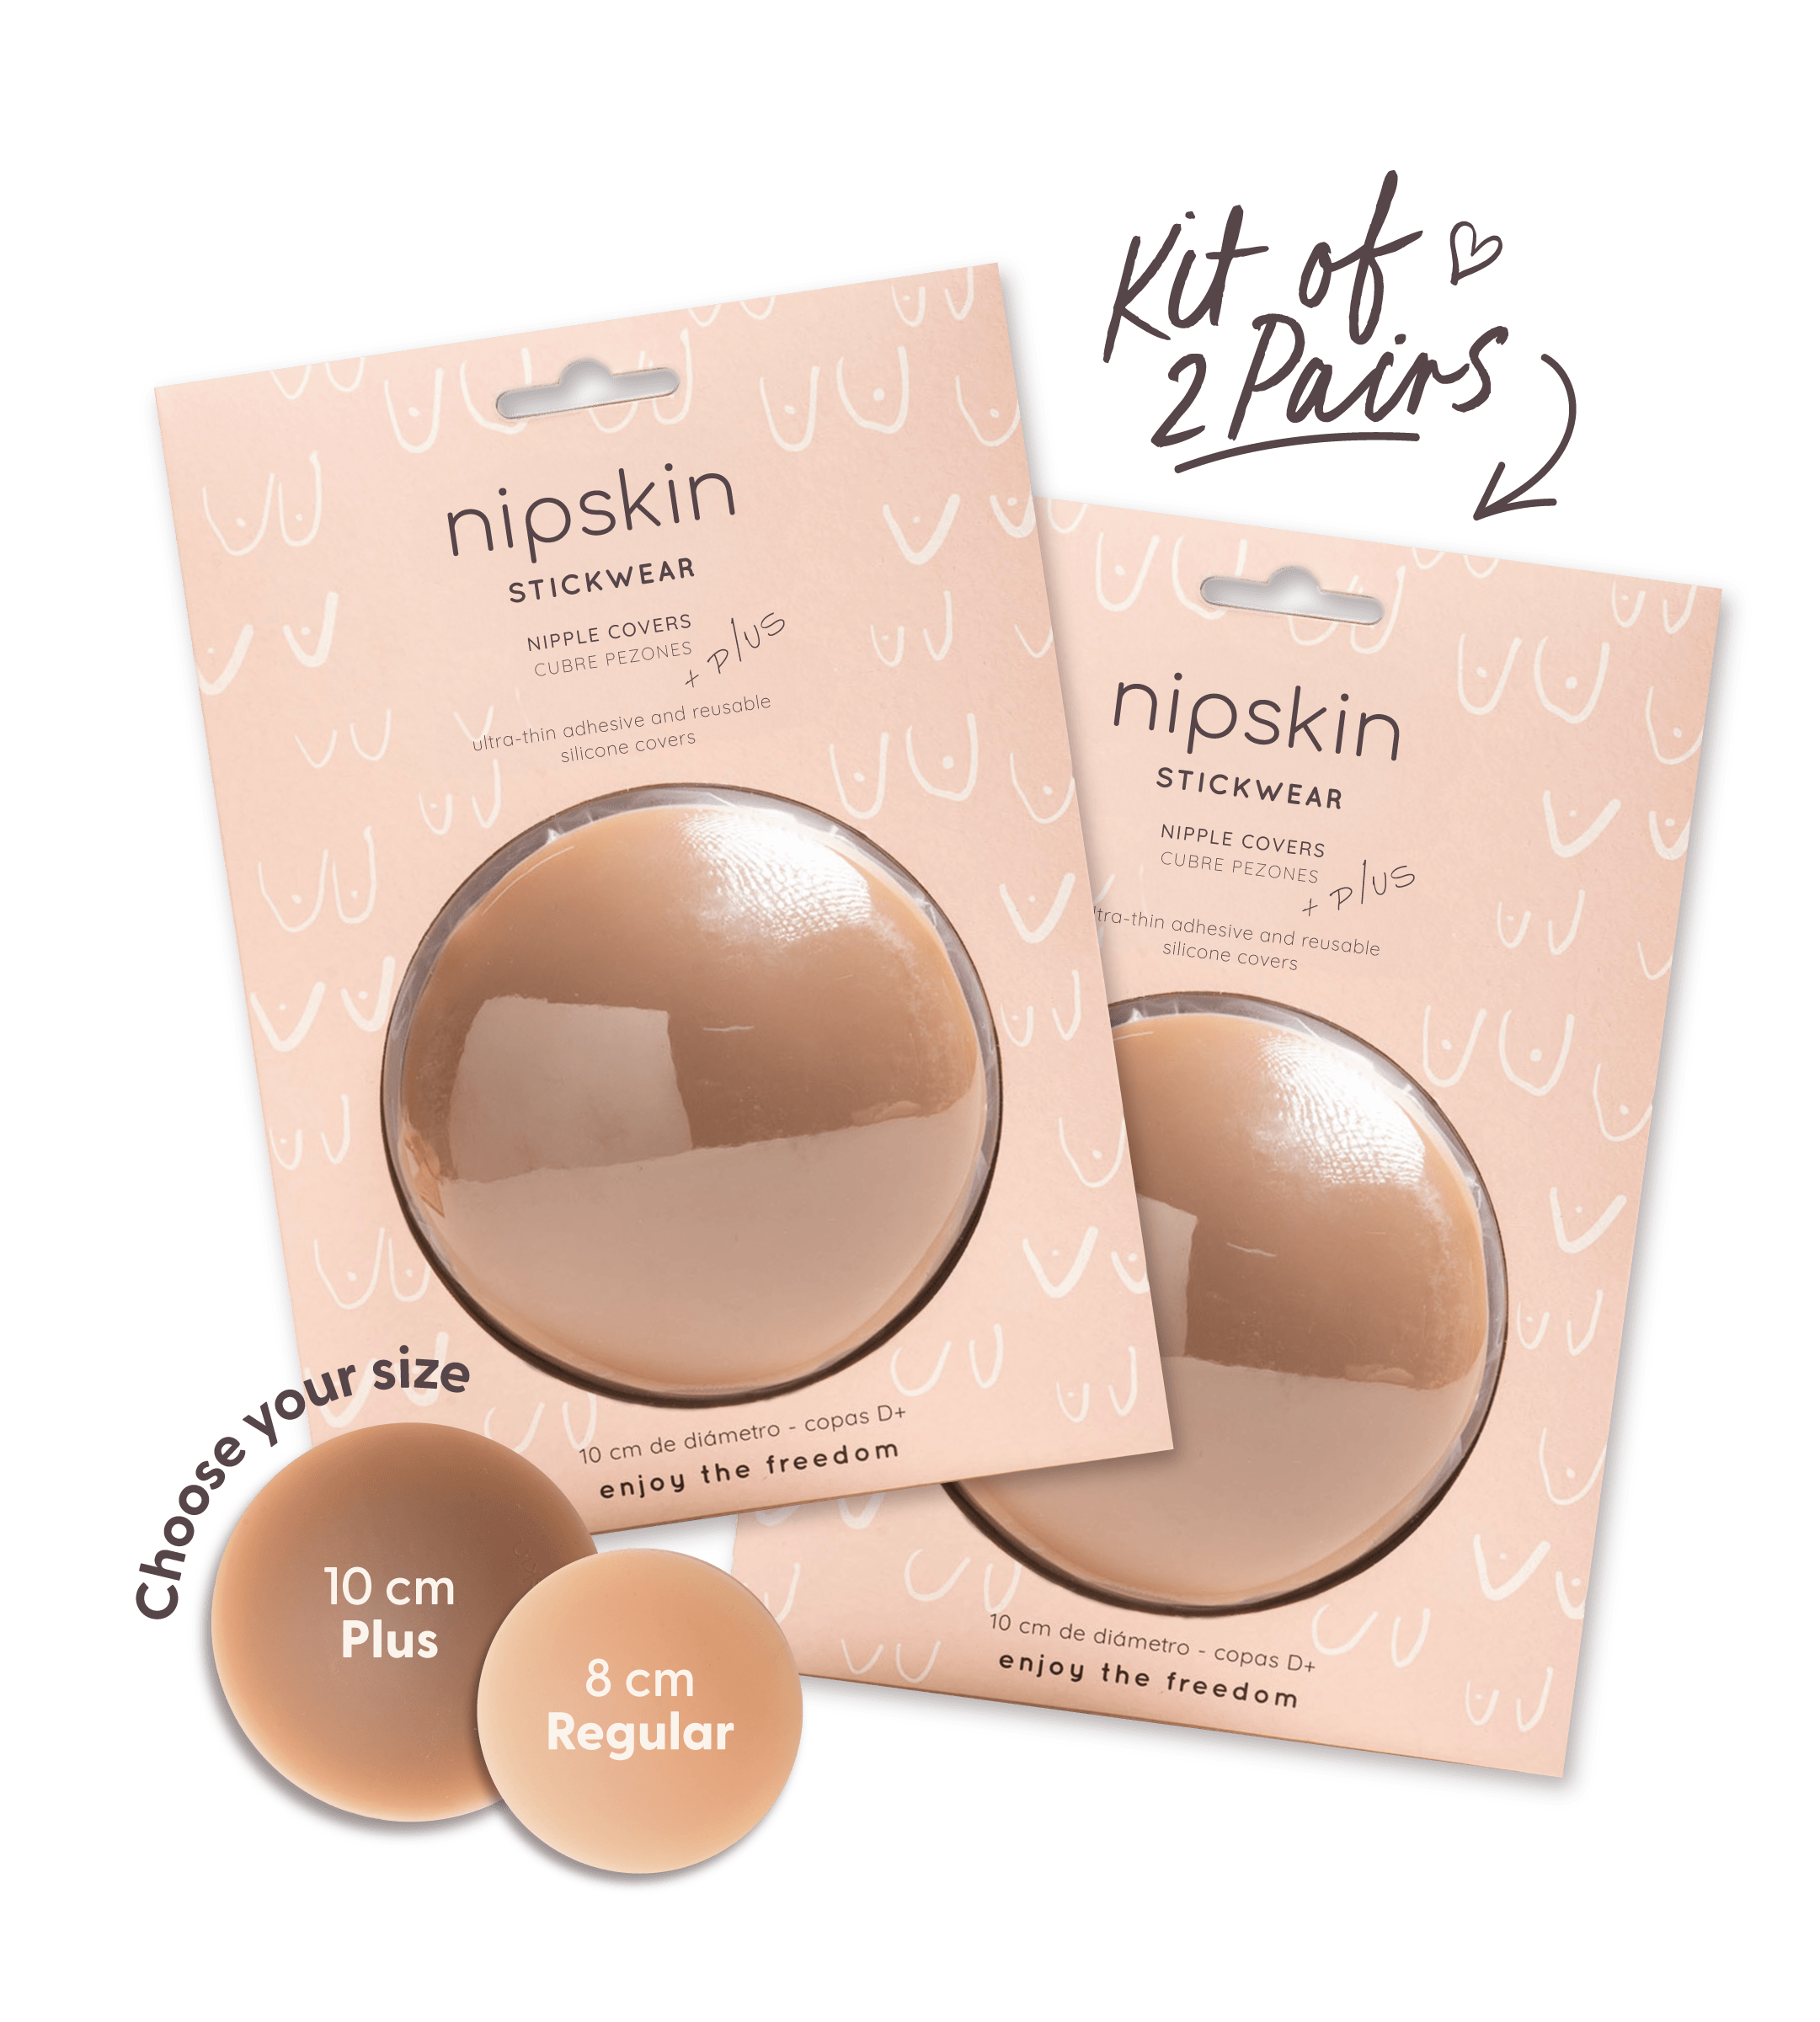 Kit - 2 Pairs of Reusable Nipple Covers – Nipskin Stickwear TM